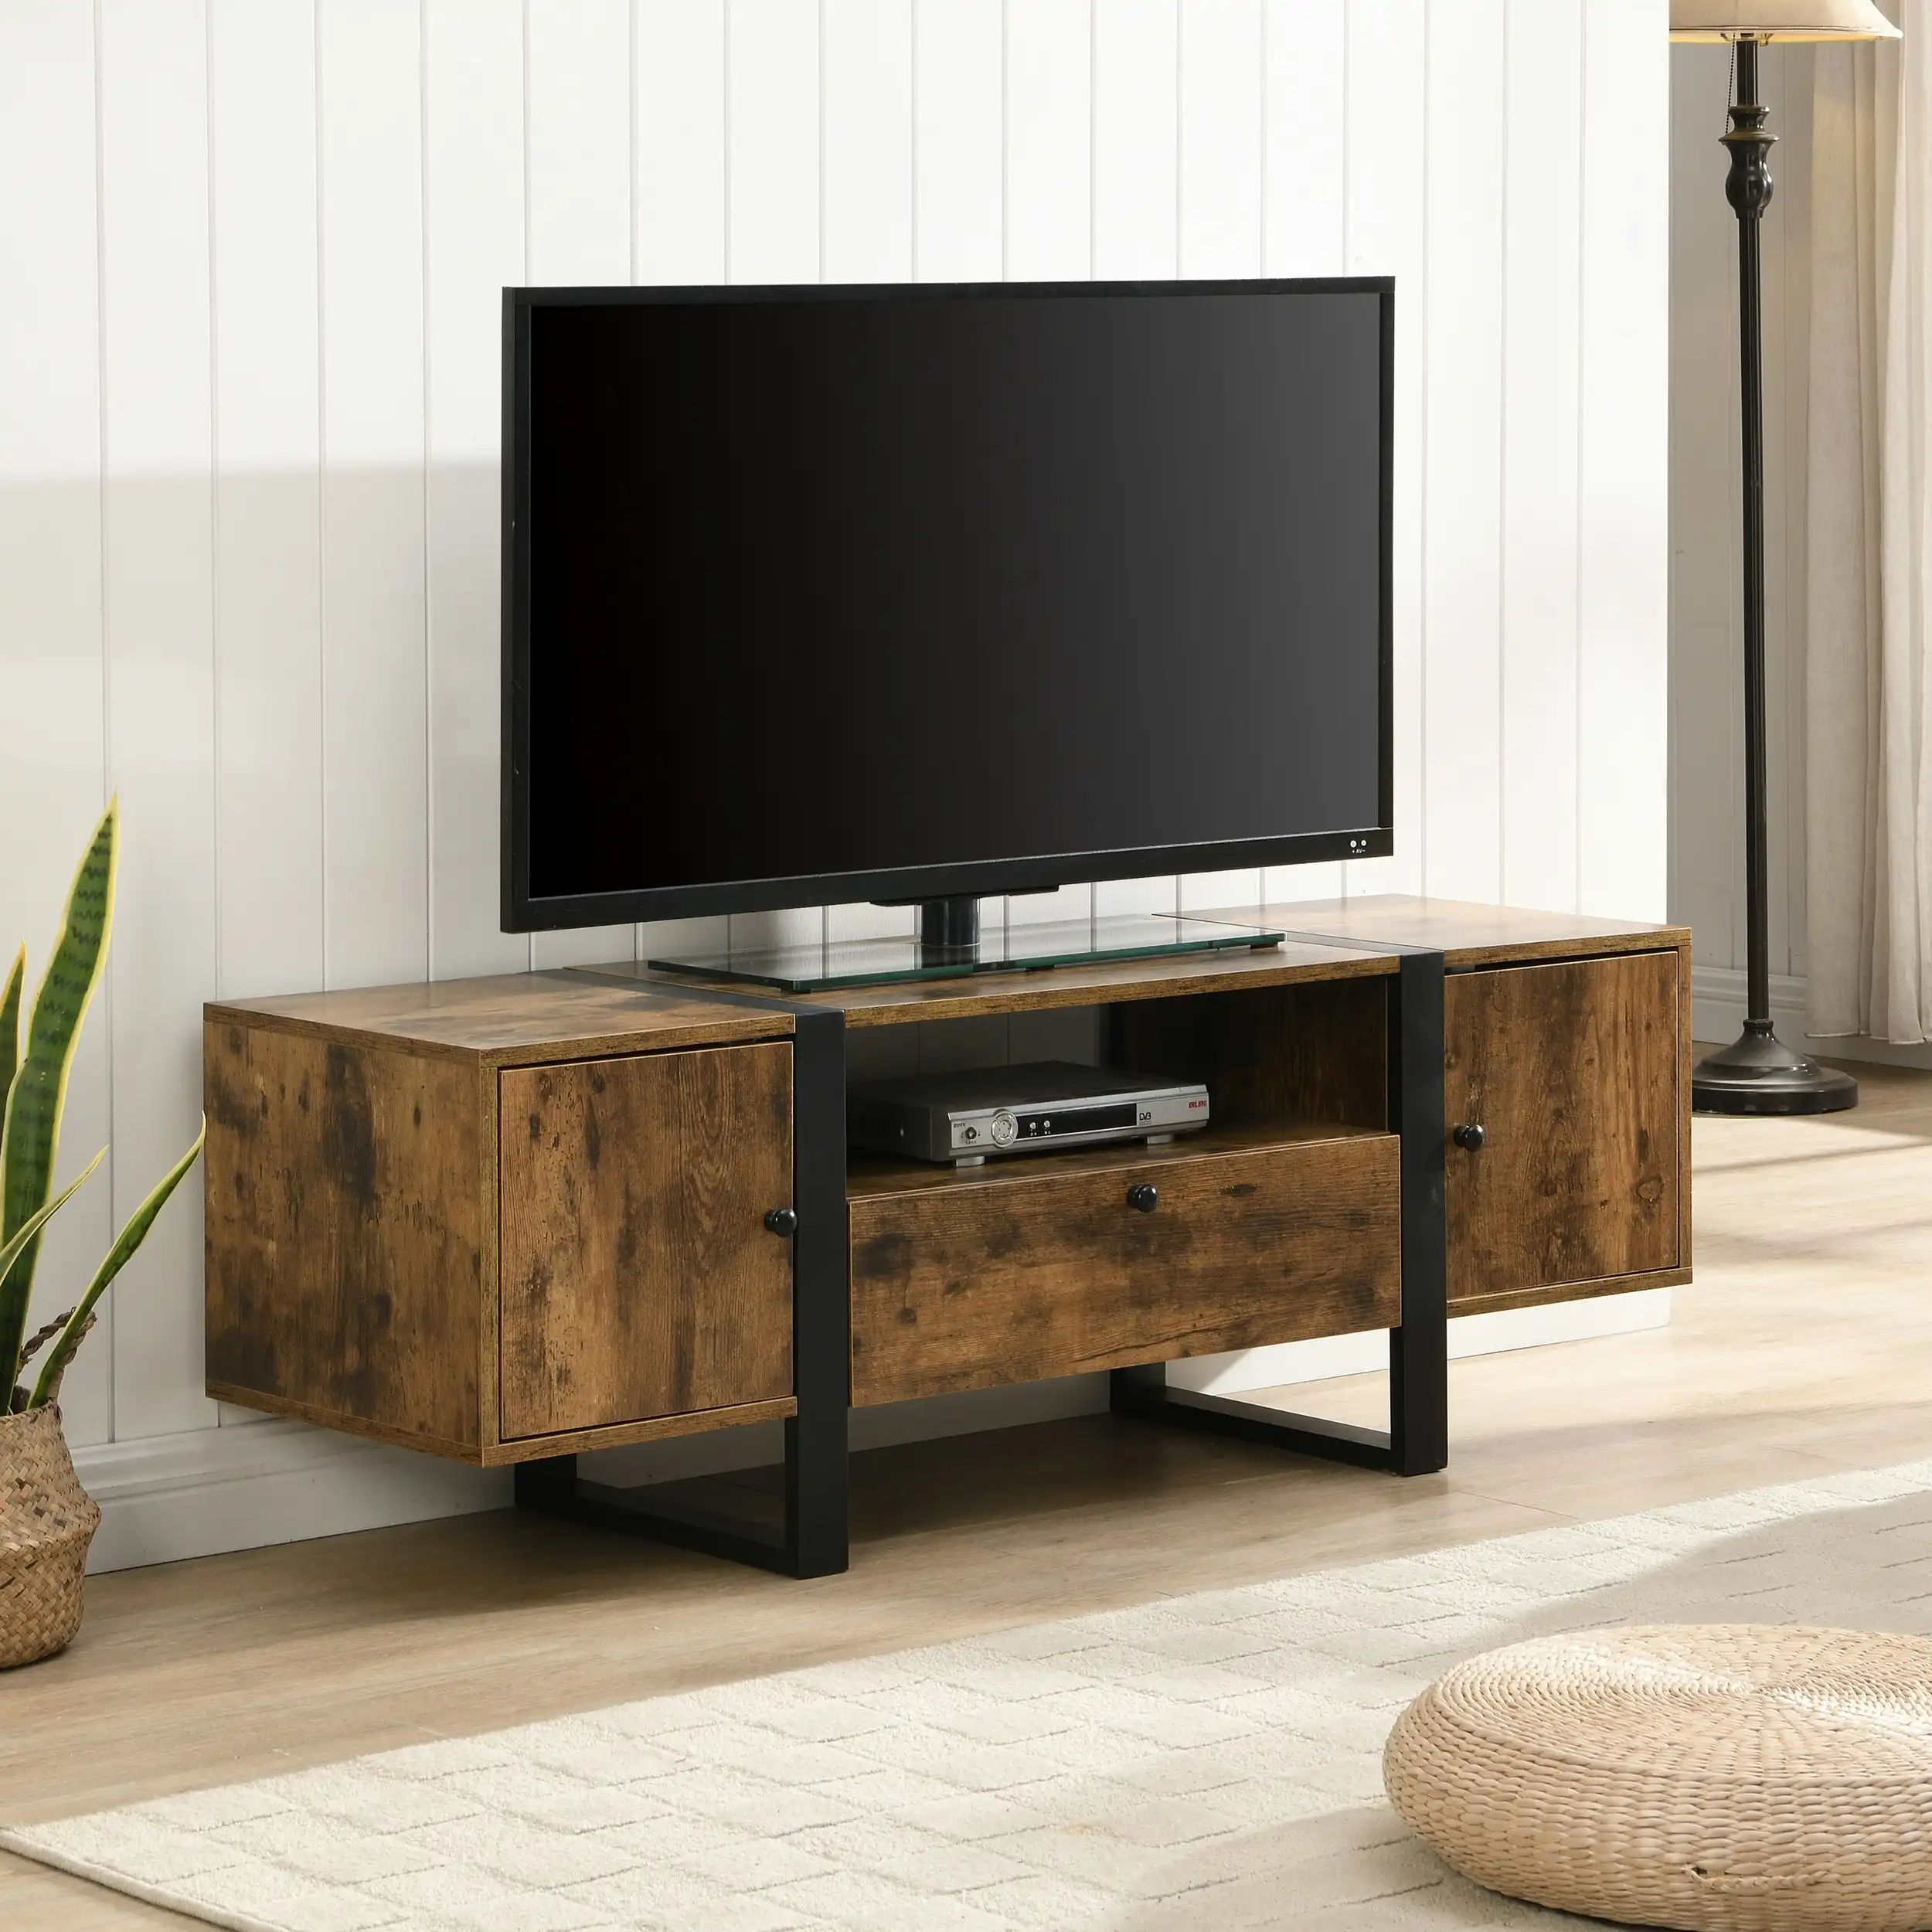 IHOMDEC Industrial Metal & Wood TV Cabinet TV Stand with Cabinets and Open Shelf Rustic Dark Brown